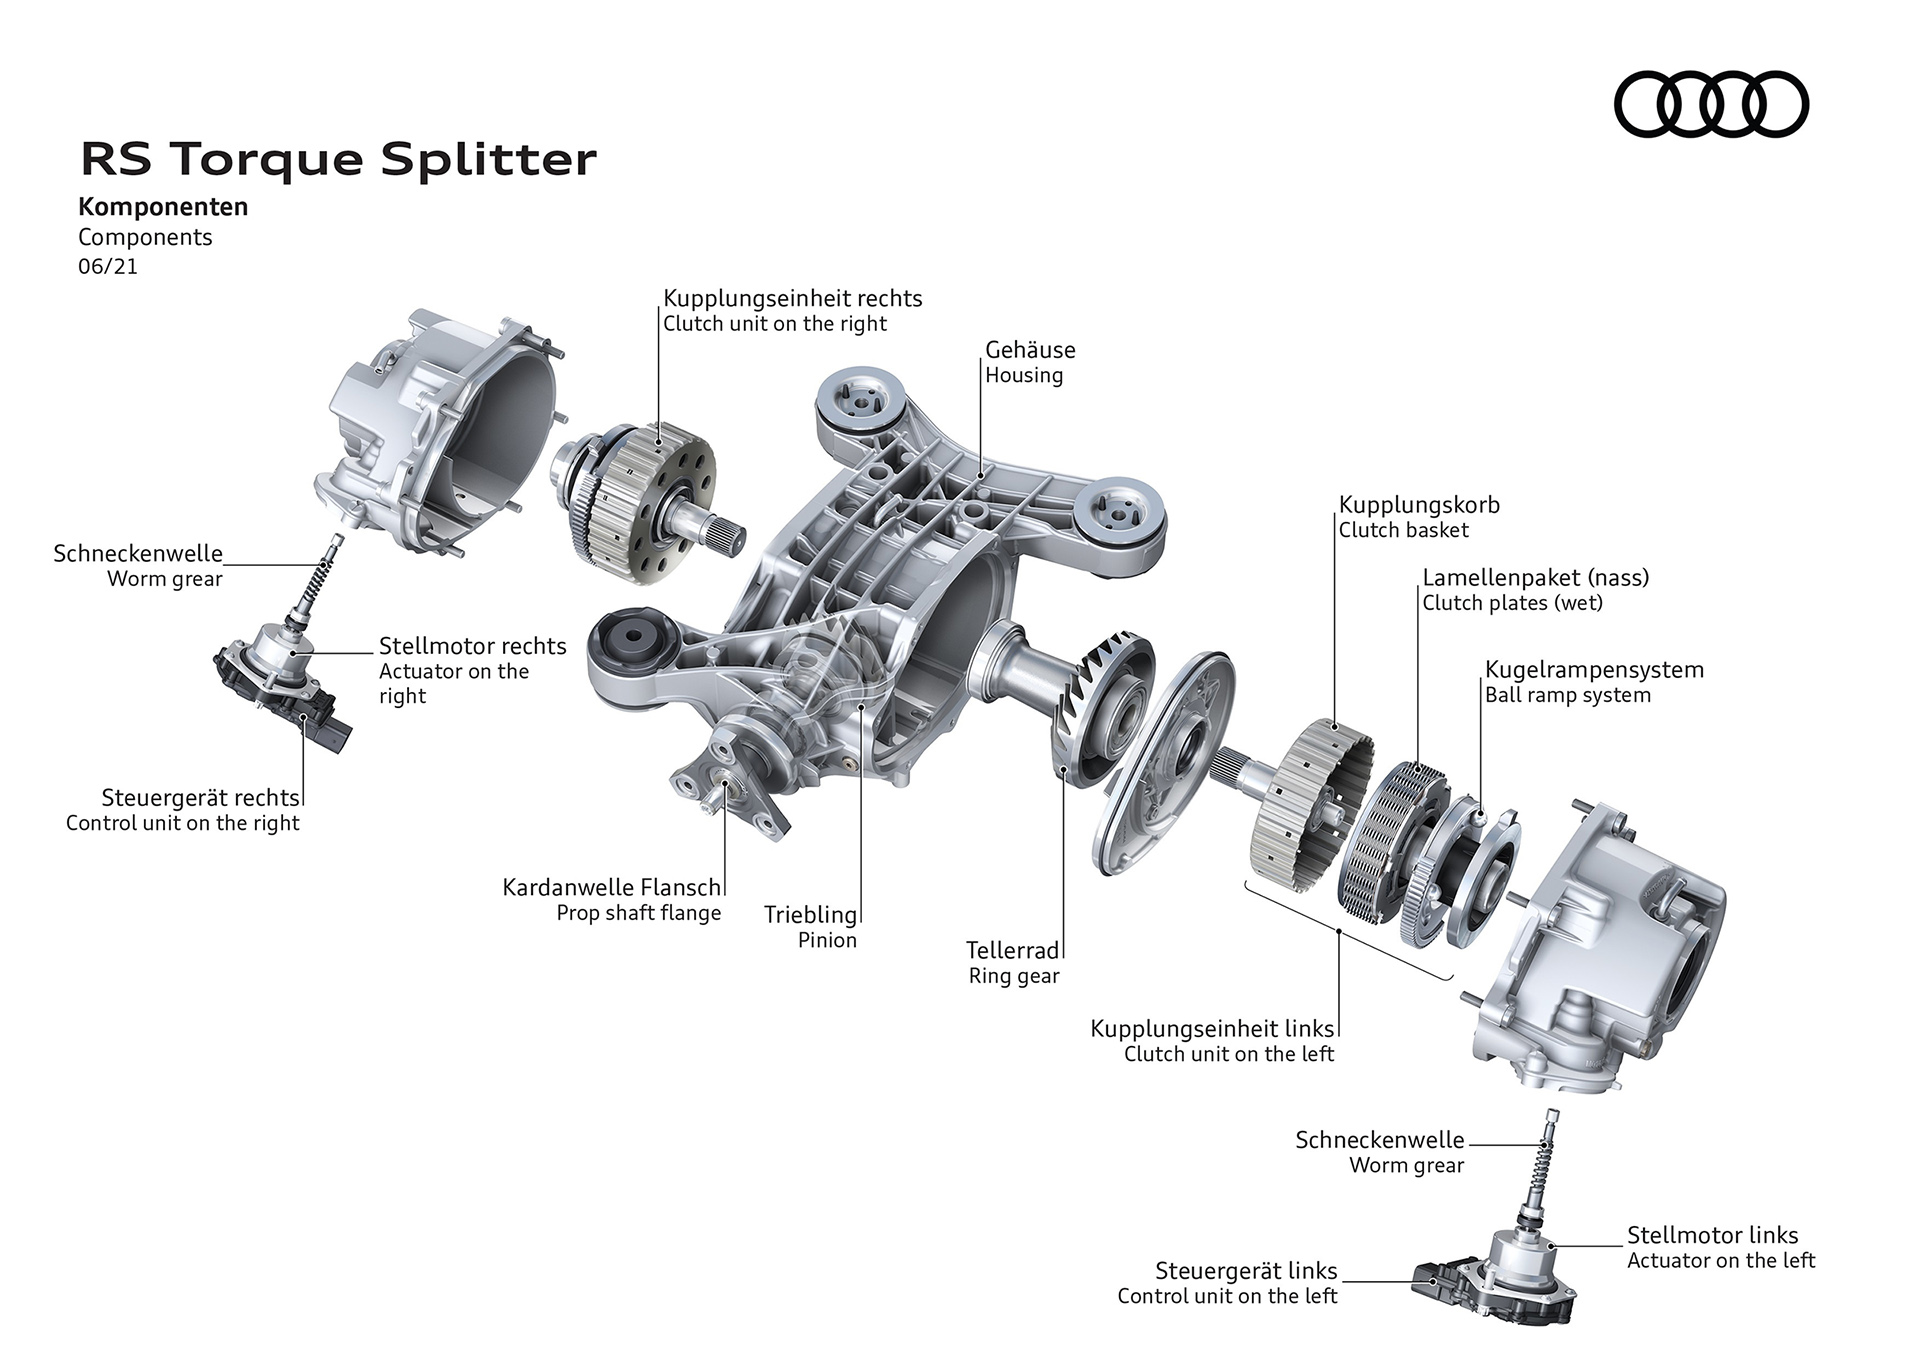 NEO AUDI RS 3 TORQUE SPLITTER 12 Πώς λειτουργεί το RS Torque Splitter του νέου Audi RS 3